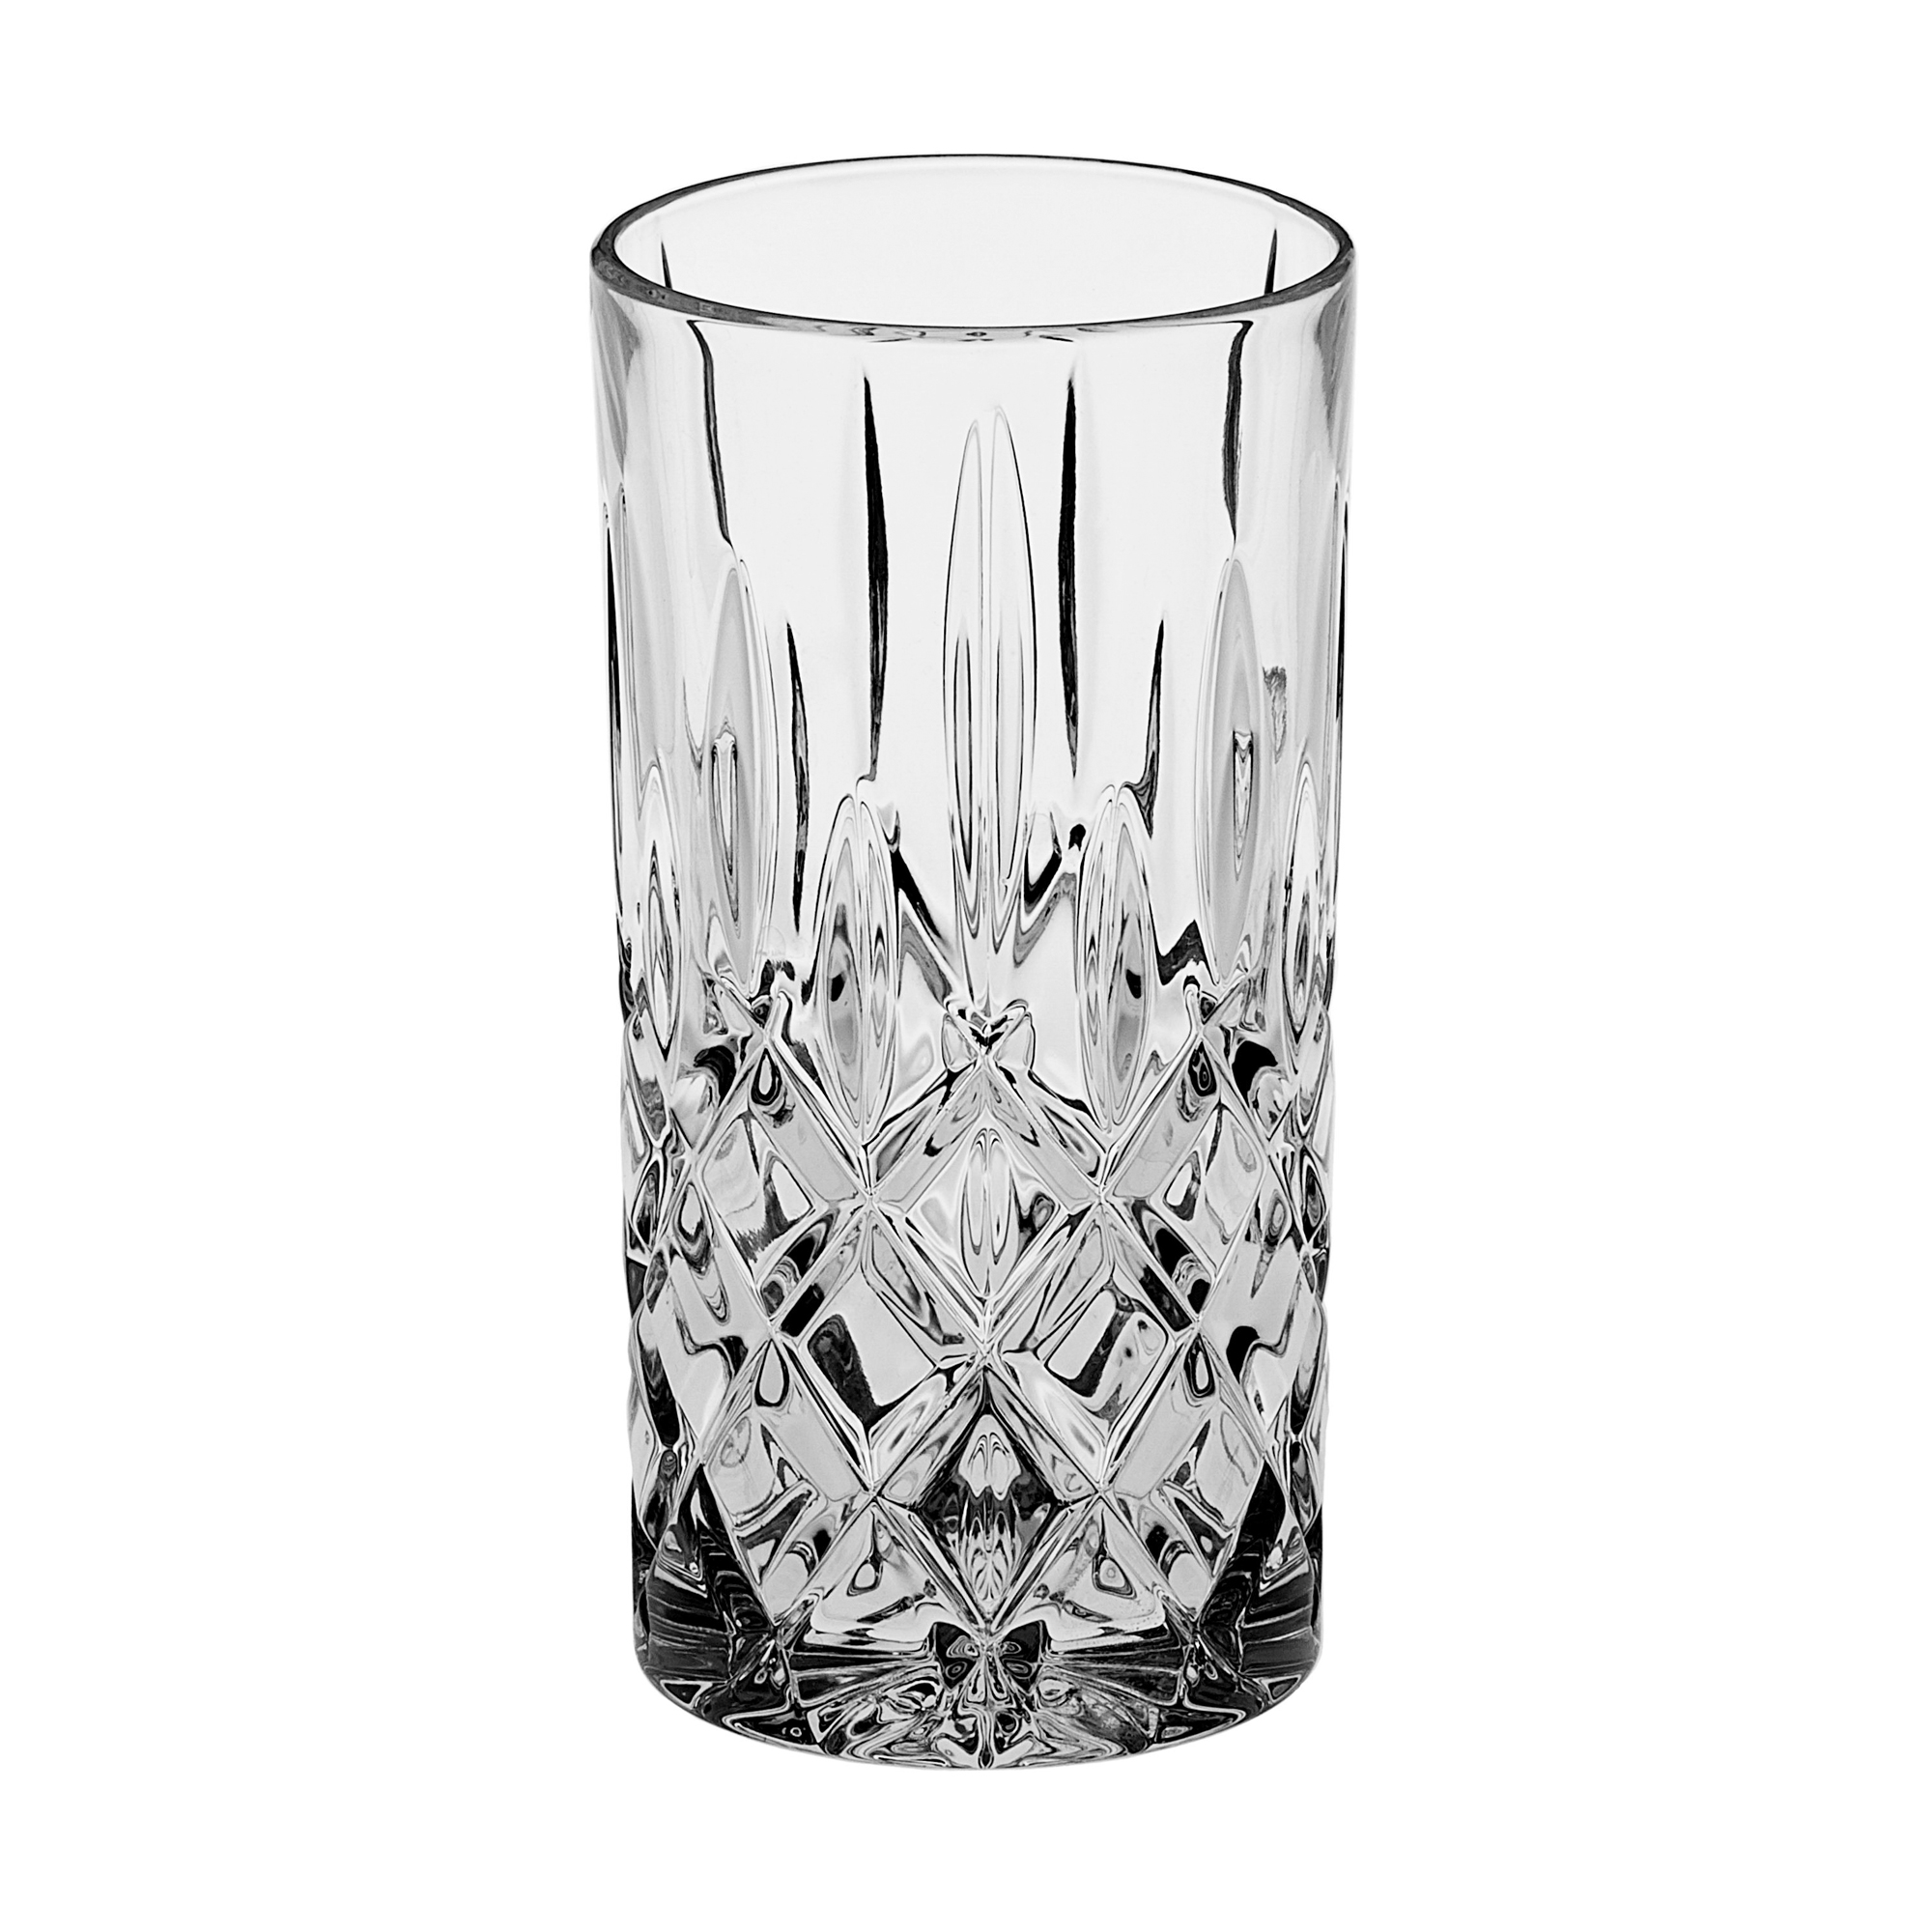 Набор стаканов Crystal bohemia as angela 6х350мл (990/21100/0/42000/320-609) набор стаканов x lady 240 мл 6 шт 990 23190 0 39750 240 609 crystal bohemia